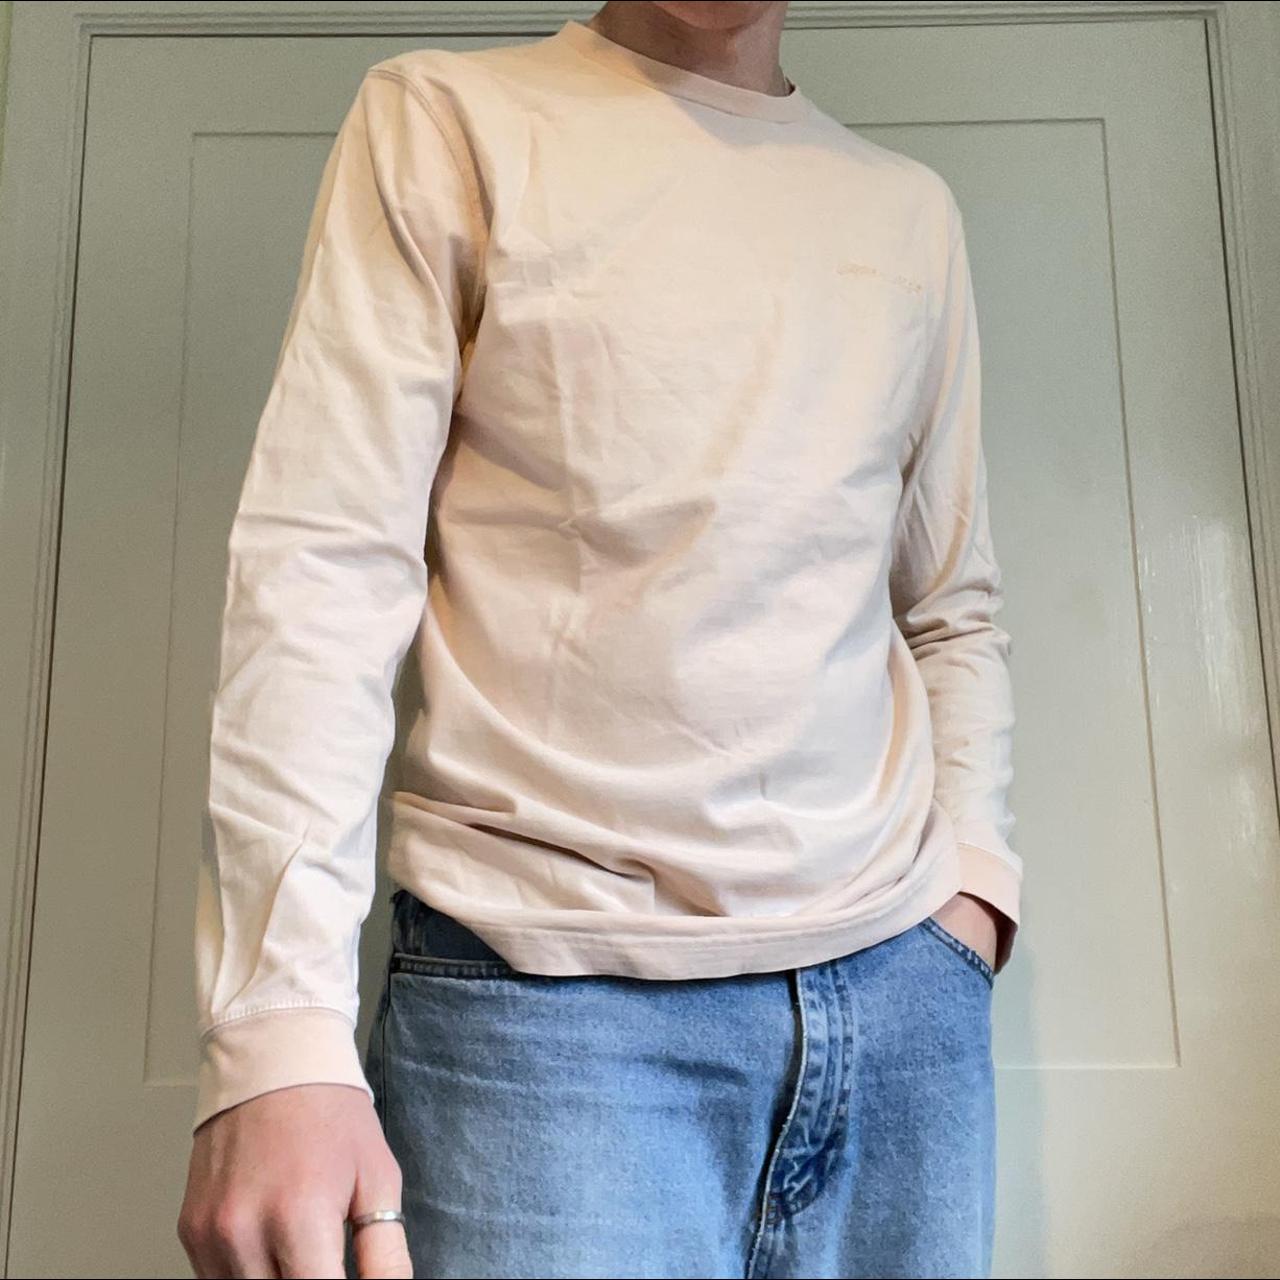 Product Image 1 - Pale salmon long-sleeve Quiksilver t-shirt
Men’s